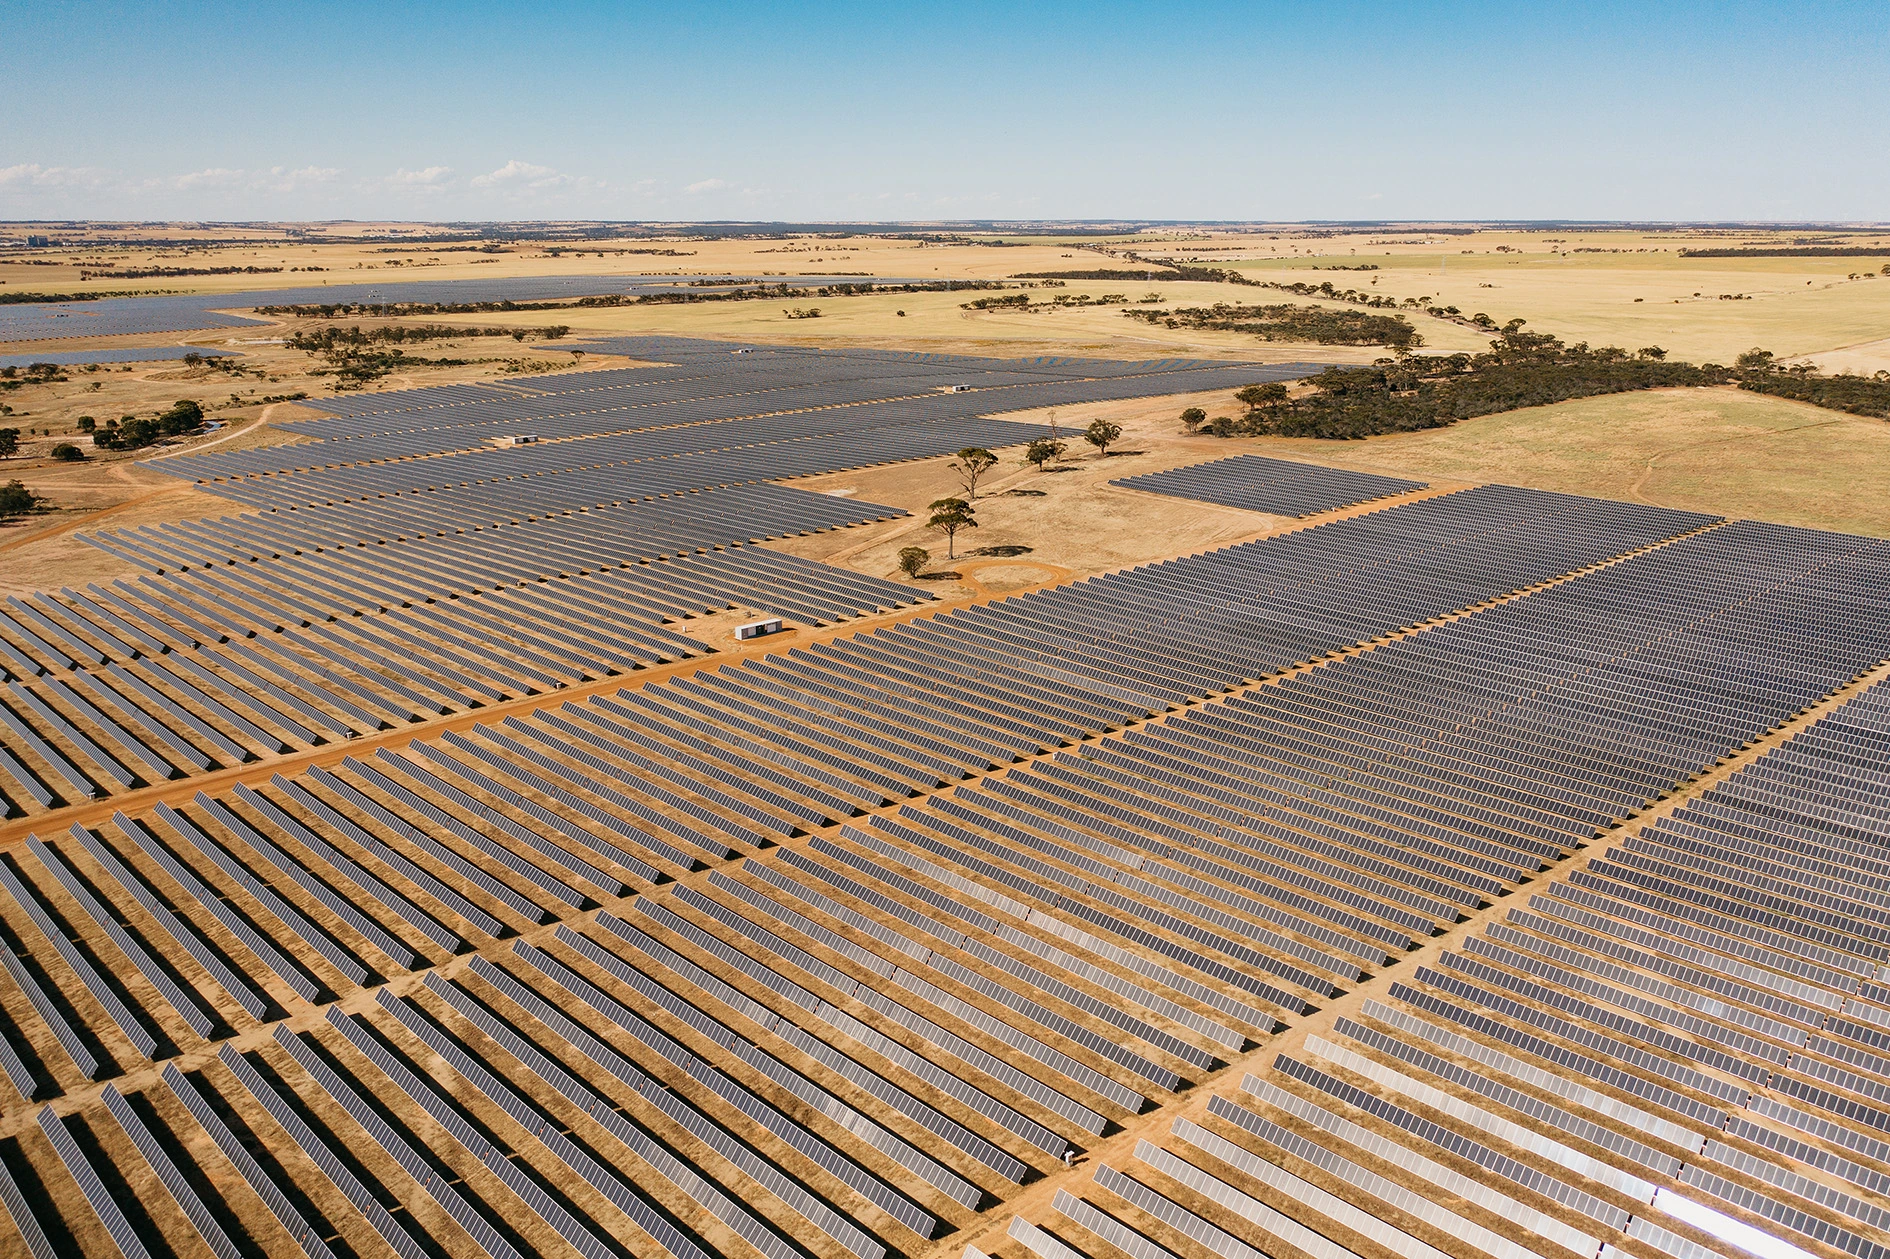 Risen Solar Panels Powering the Merredin Solar Farm with blue sky on the horizon